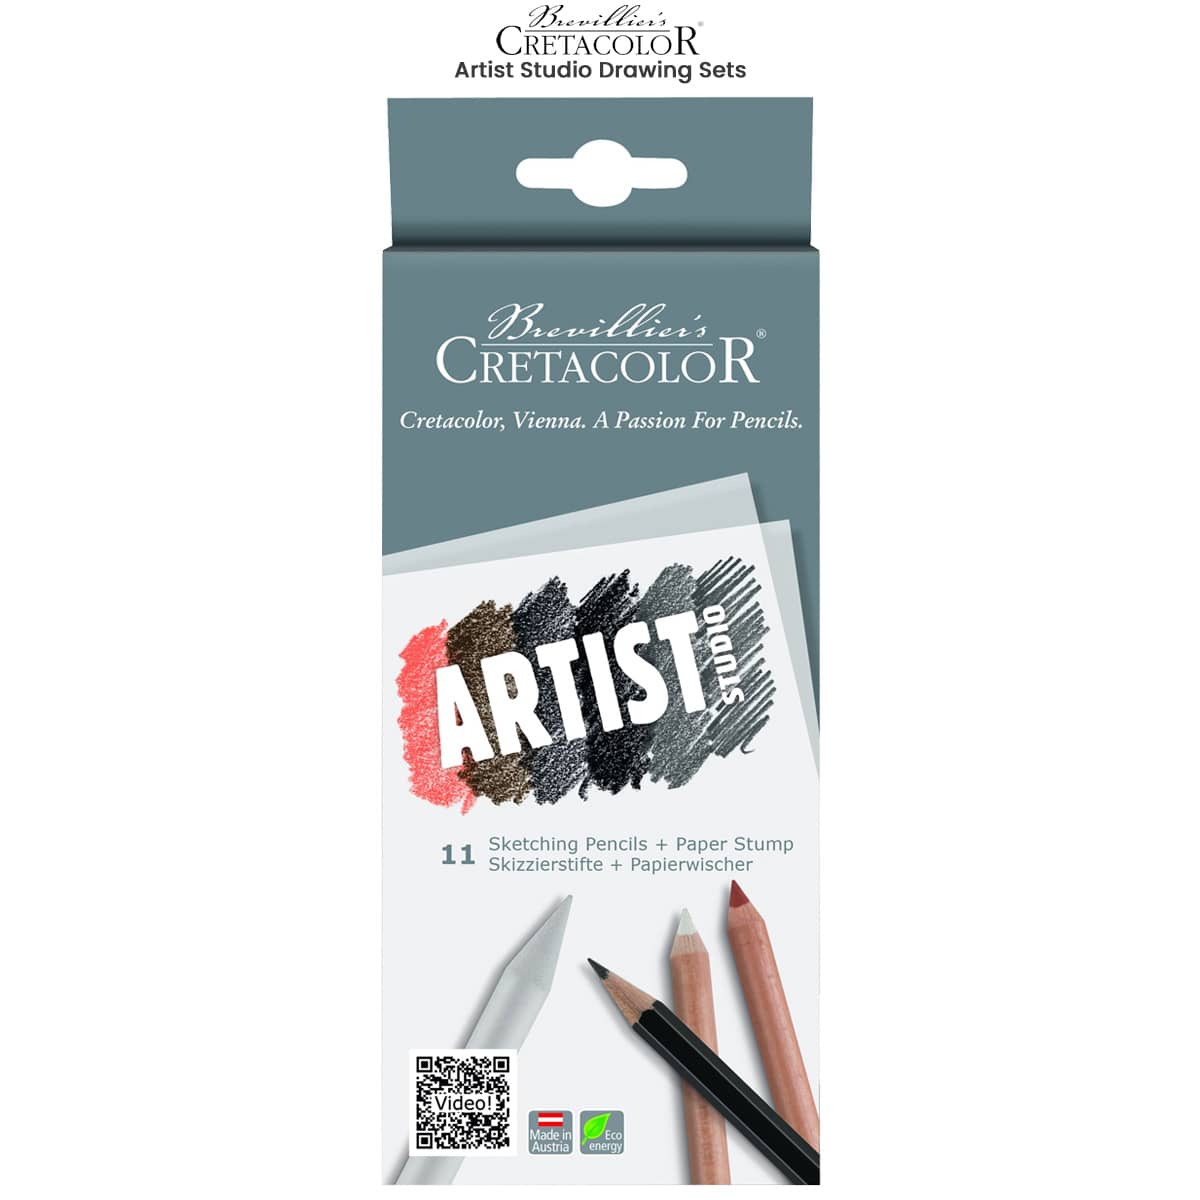 https://www.jerrysartarama.com/media/catalog/product/c/r/cretacolor-artist-studio-drawing-sets-main.jpg